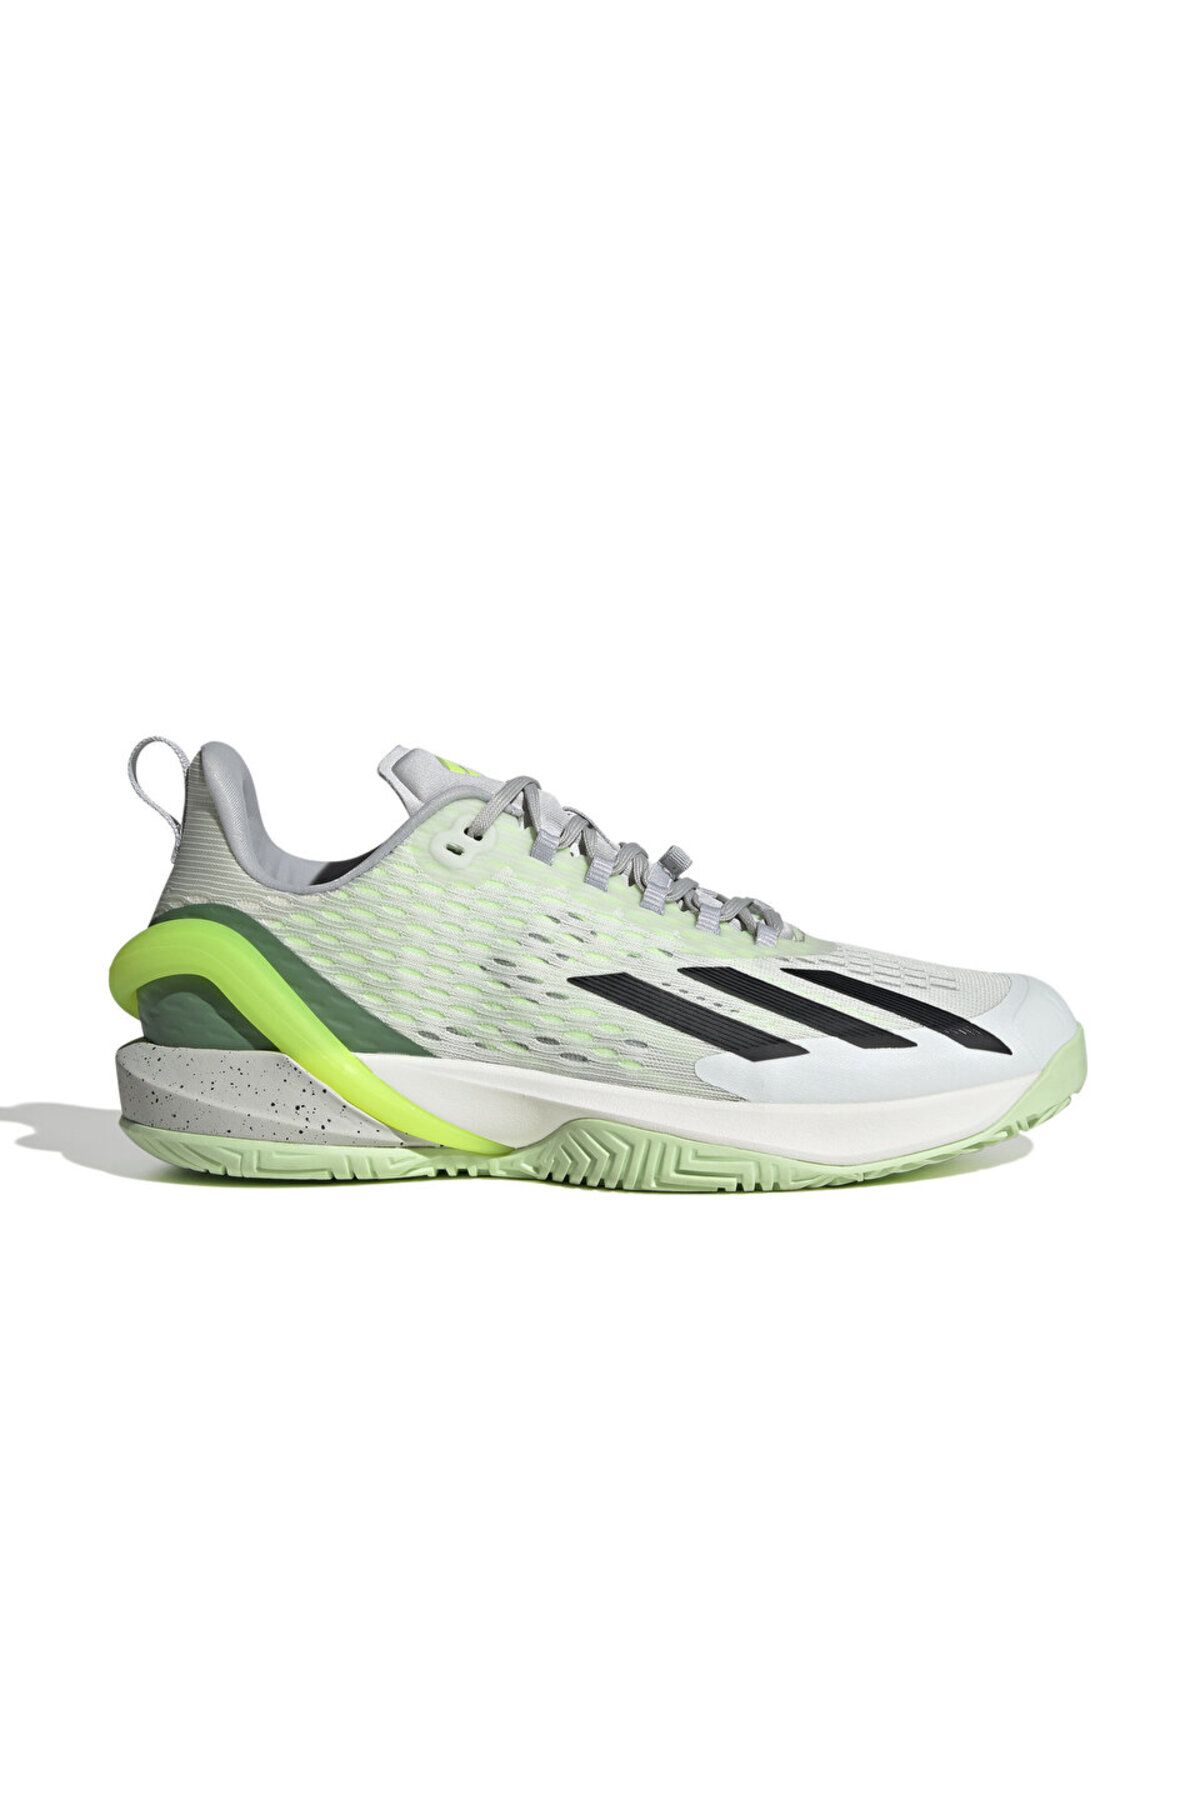 adidas Adizero Cybersonic M Unisex Tenis Ayakkabı IF0435 Beyaz